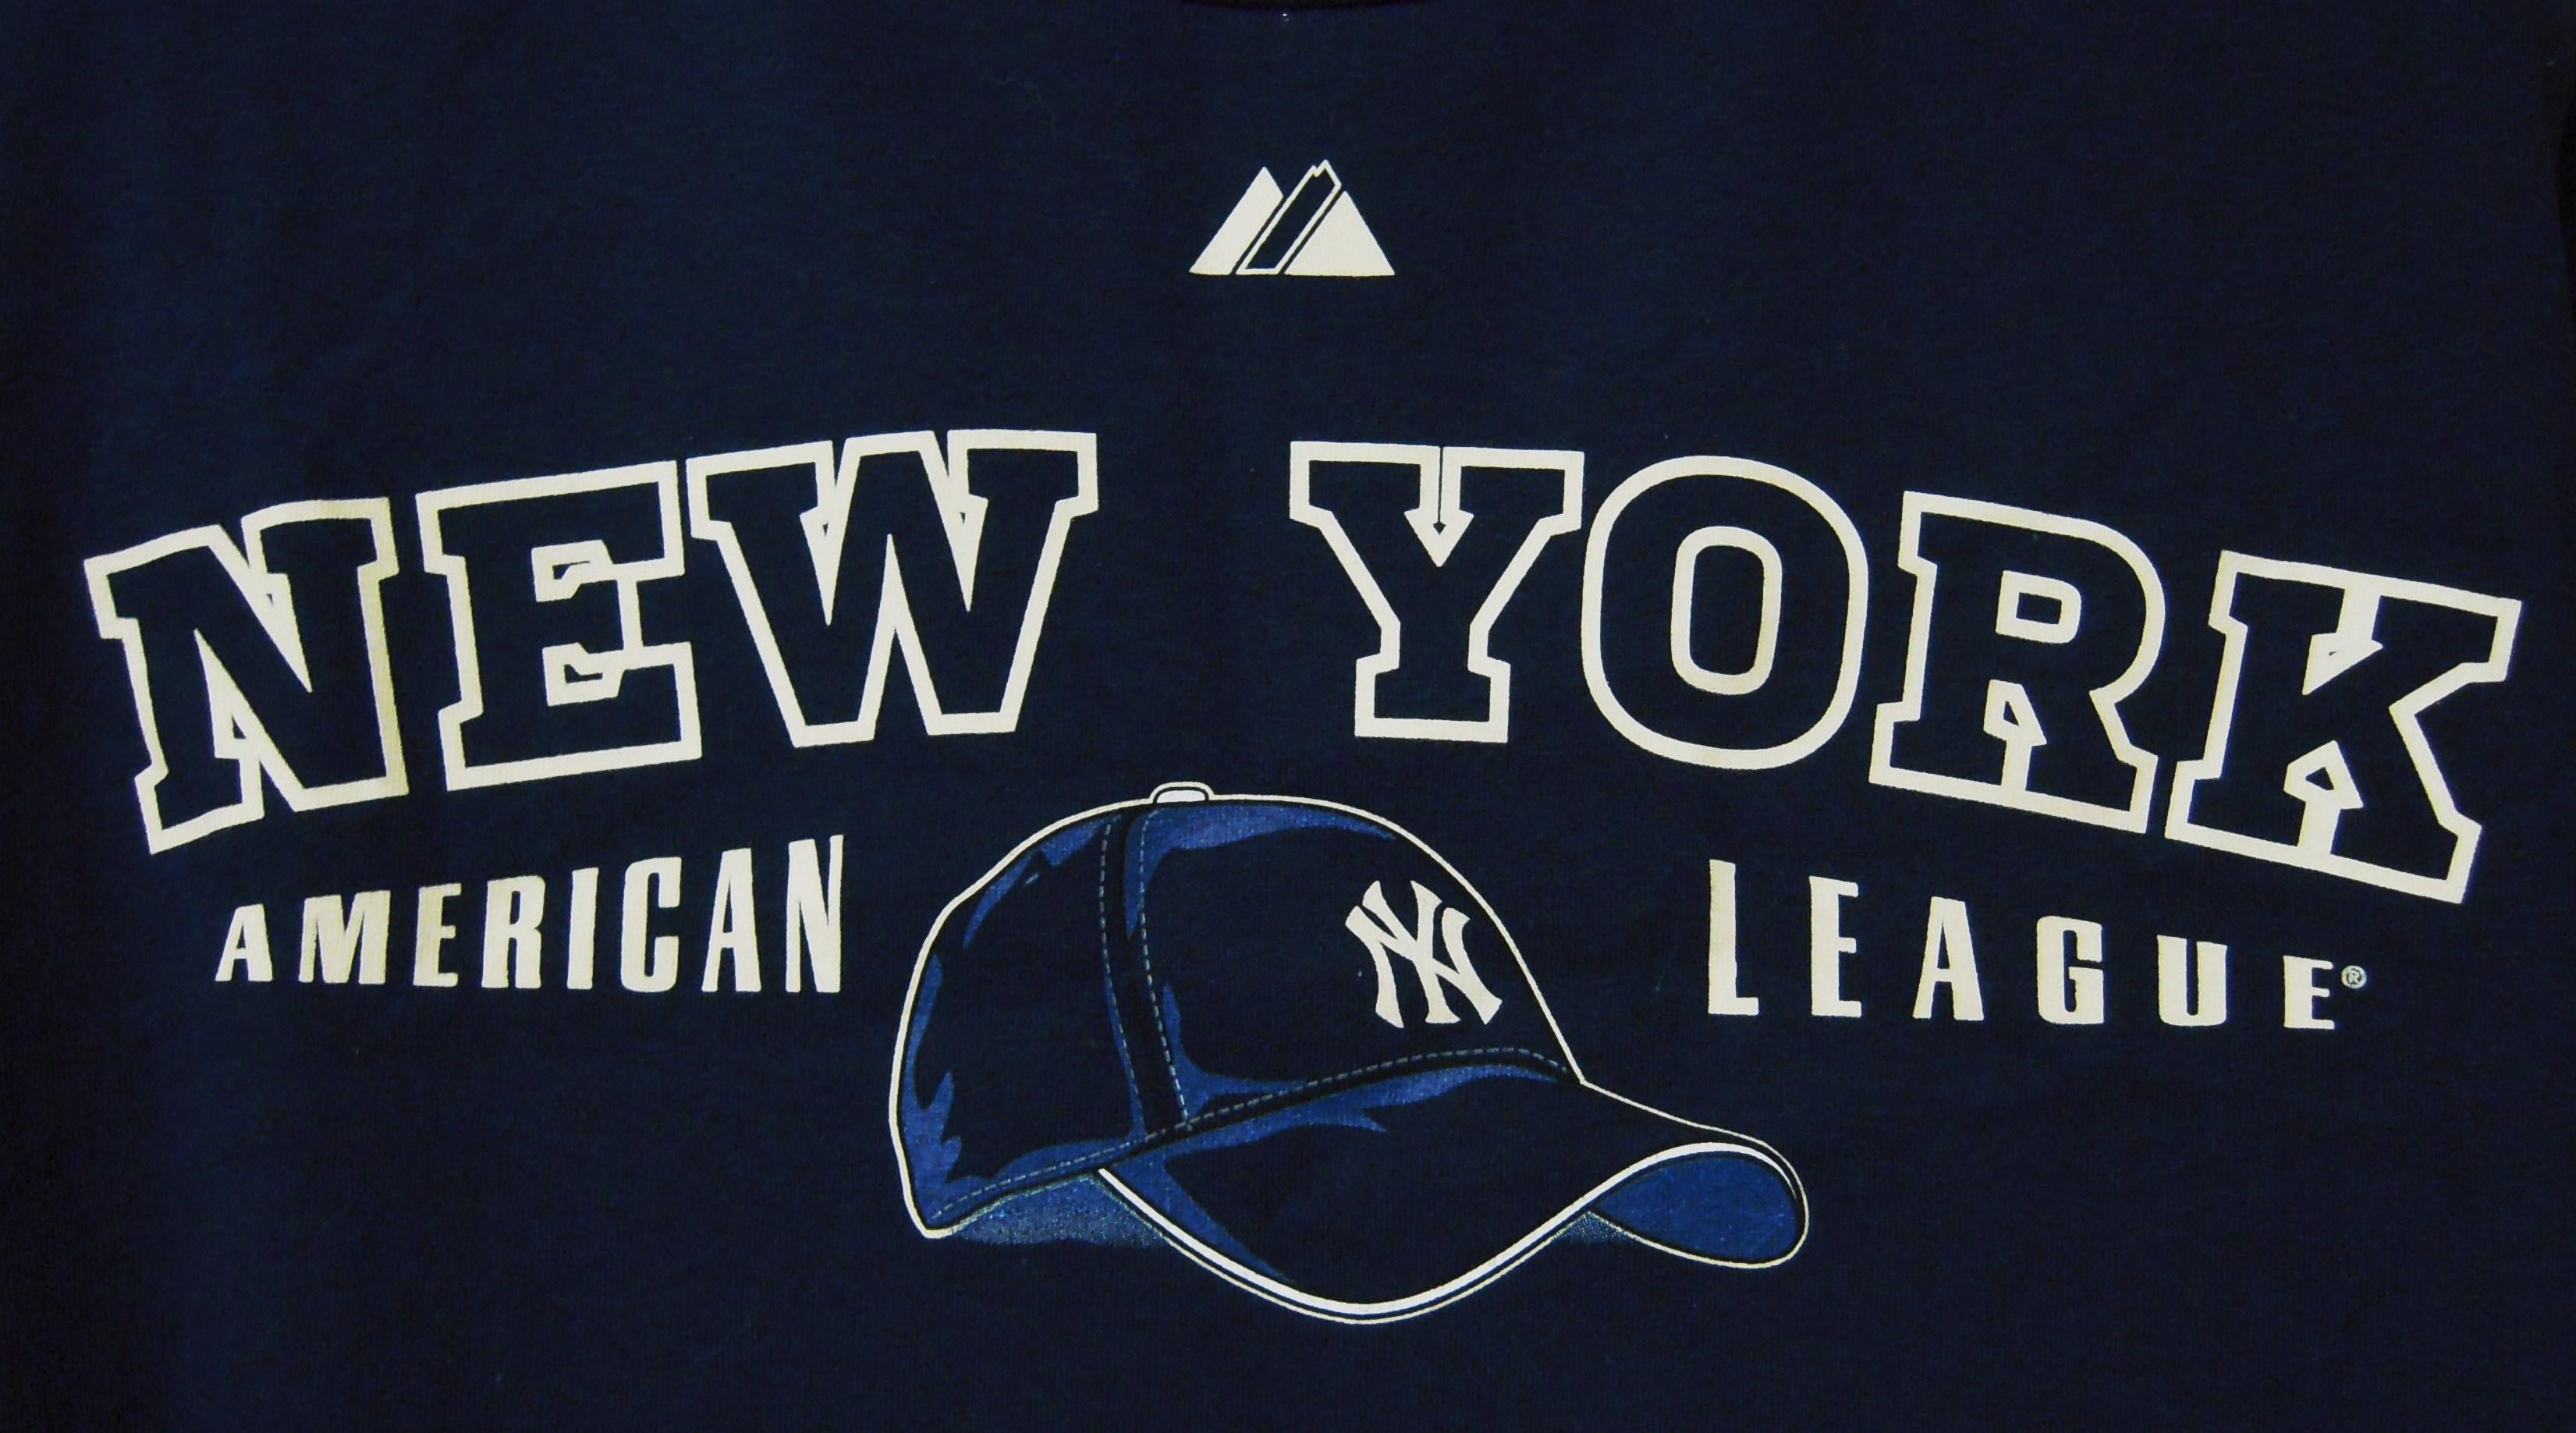 1938 NEW YORK YANKEES baseball mlb wallpaper 1600x1200 158204